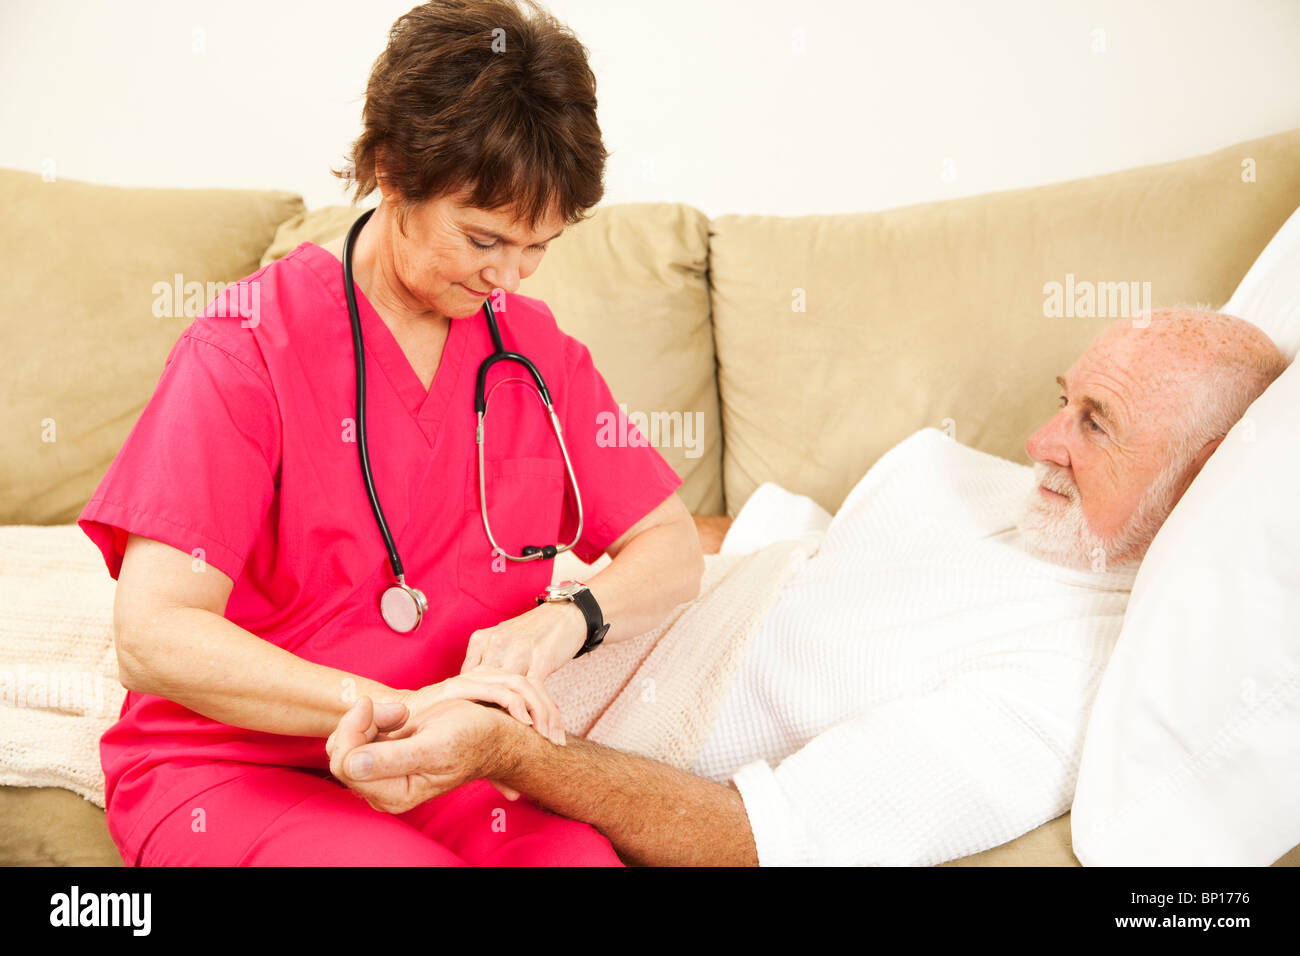 Home Gesundheit Krankenschwester am Puls eines älteren Patienten. Stockfoto